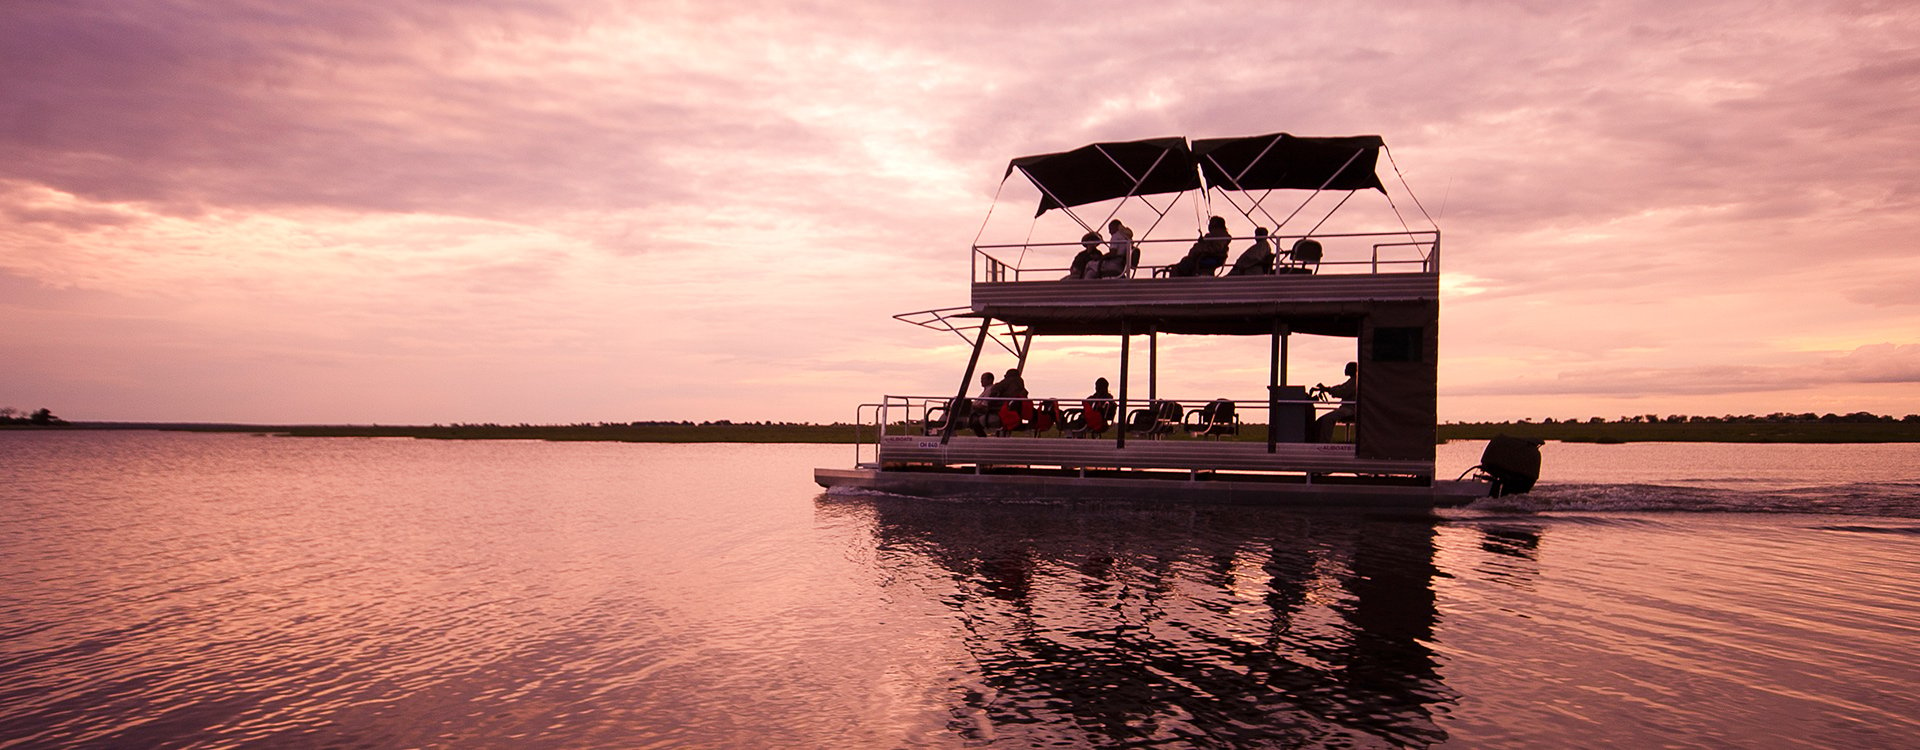 Chobe National Park_Luxury Boat Safari